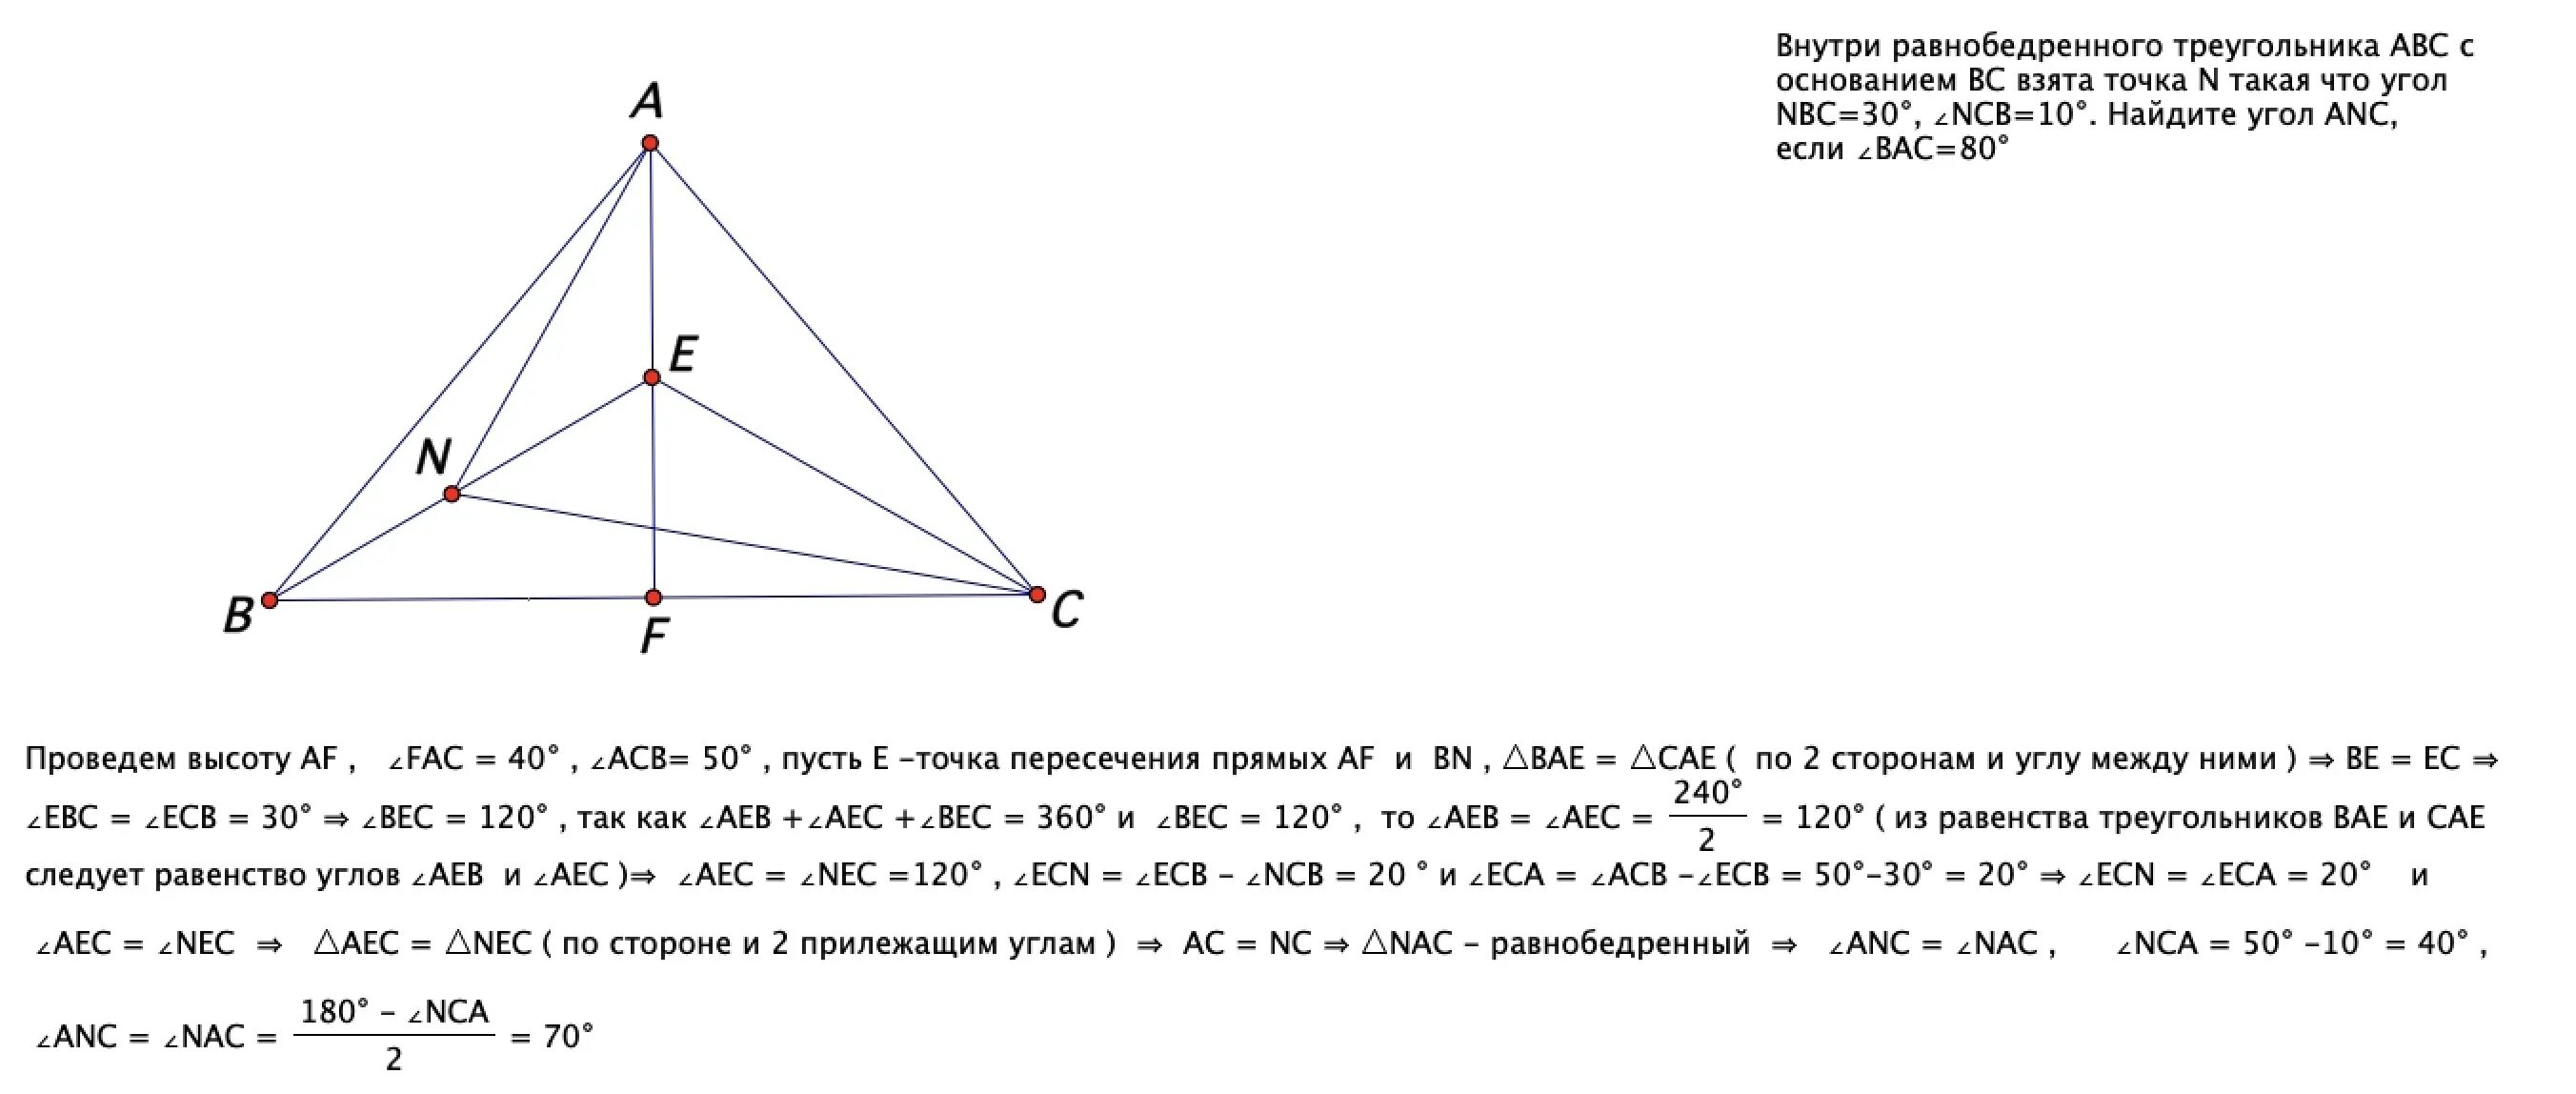 Взята точка. Внутри равнобедренного треугольника ABC С основанием BC взята точка м. В равнобедренном треугольнике ABC С основанием BC. Равнобедренный треугольник с основанием BC. Равнобедренный треугольник внутри равнобедренного треугольника.